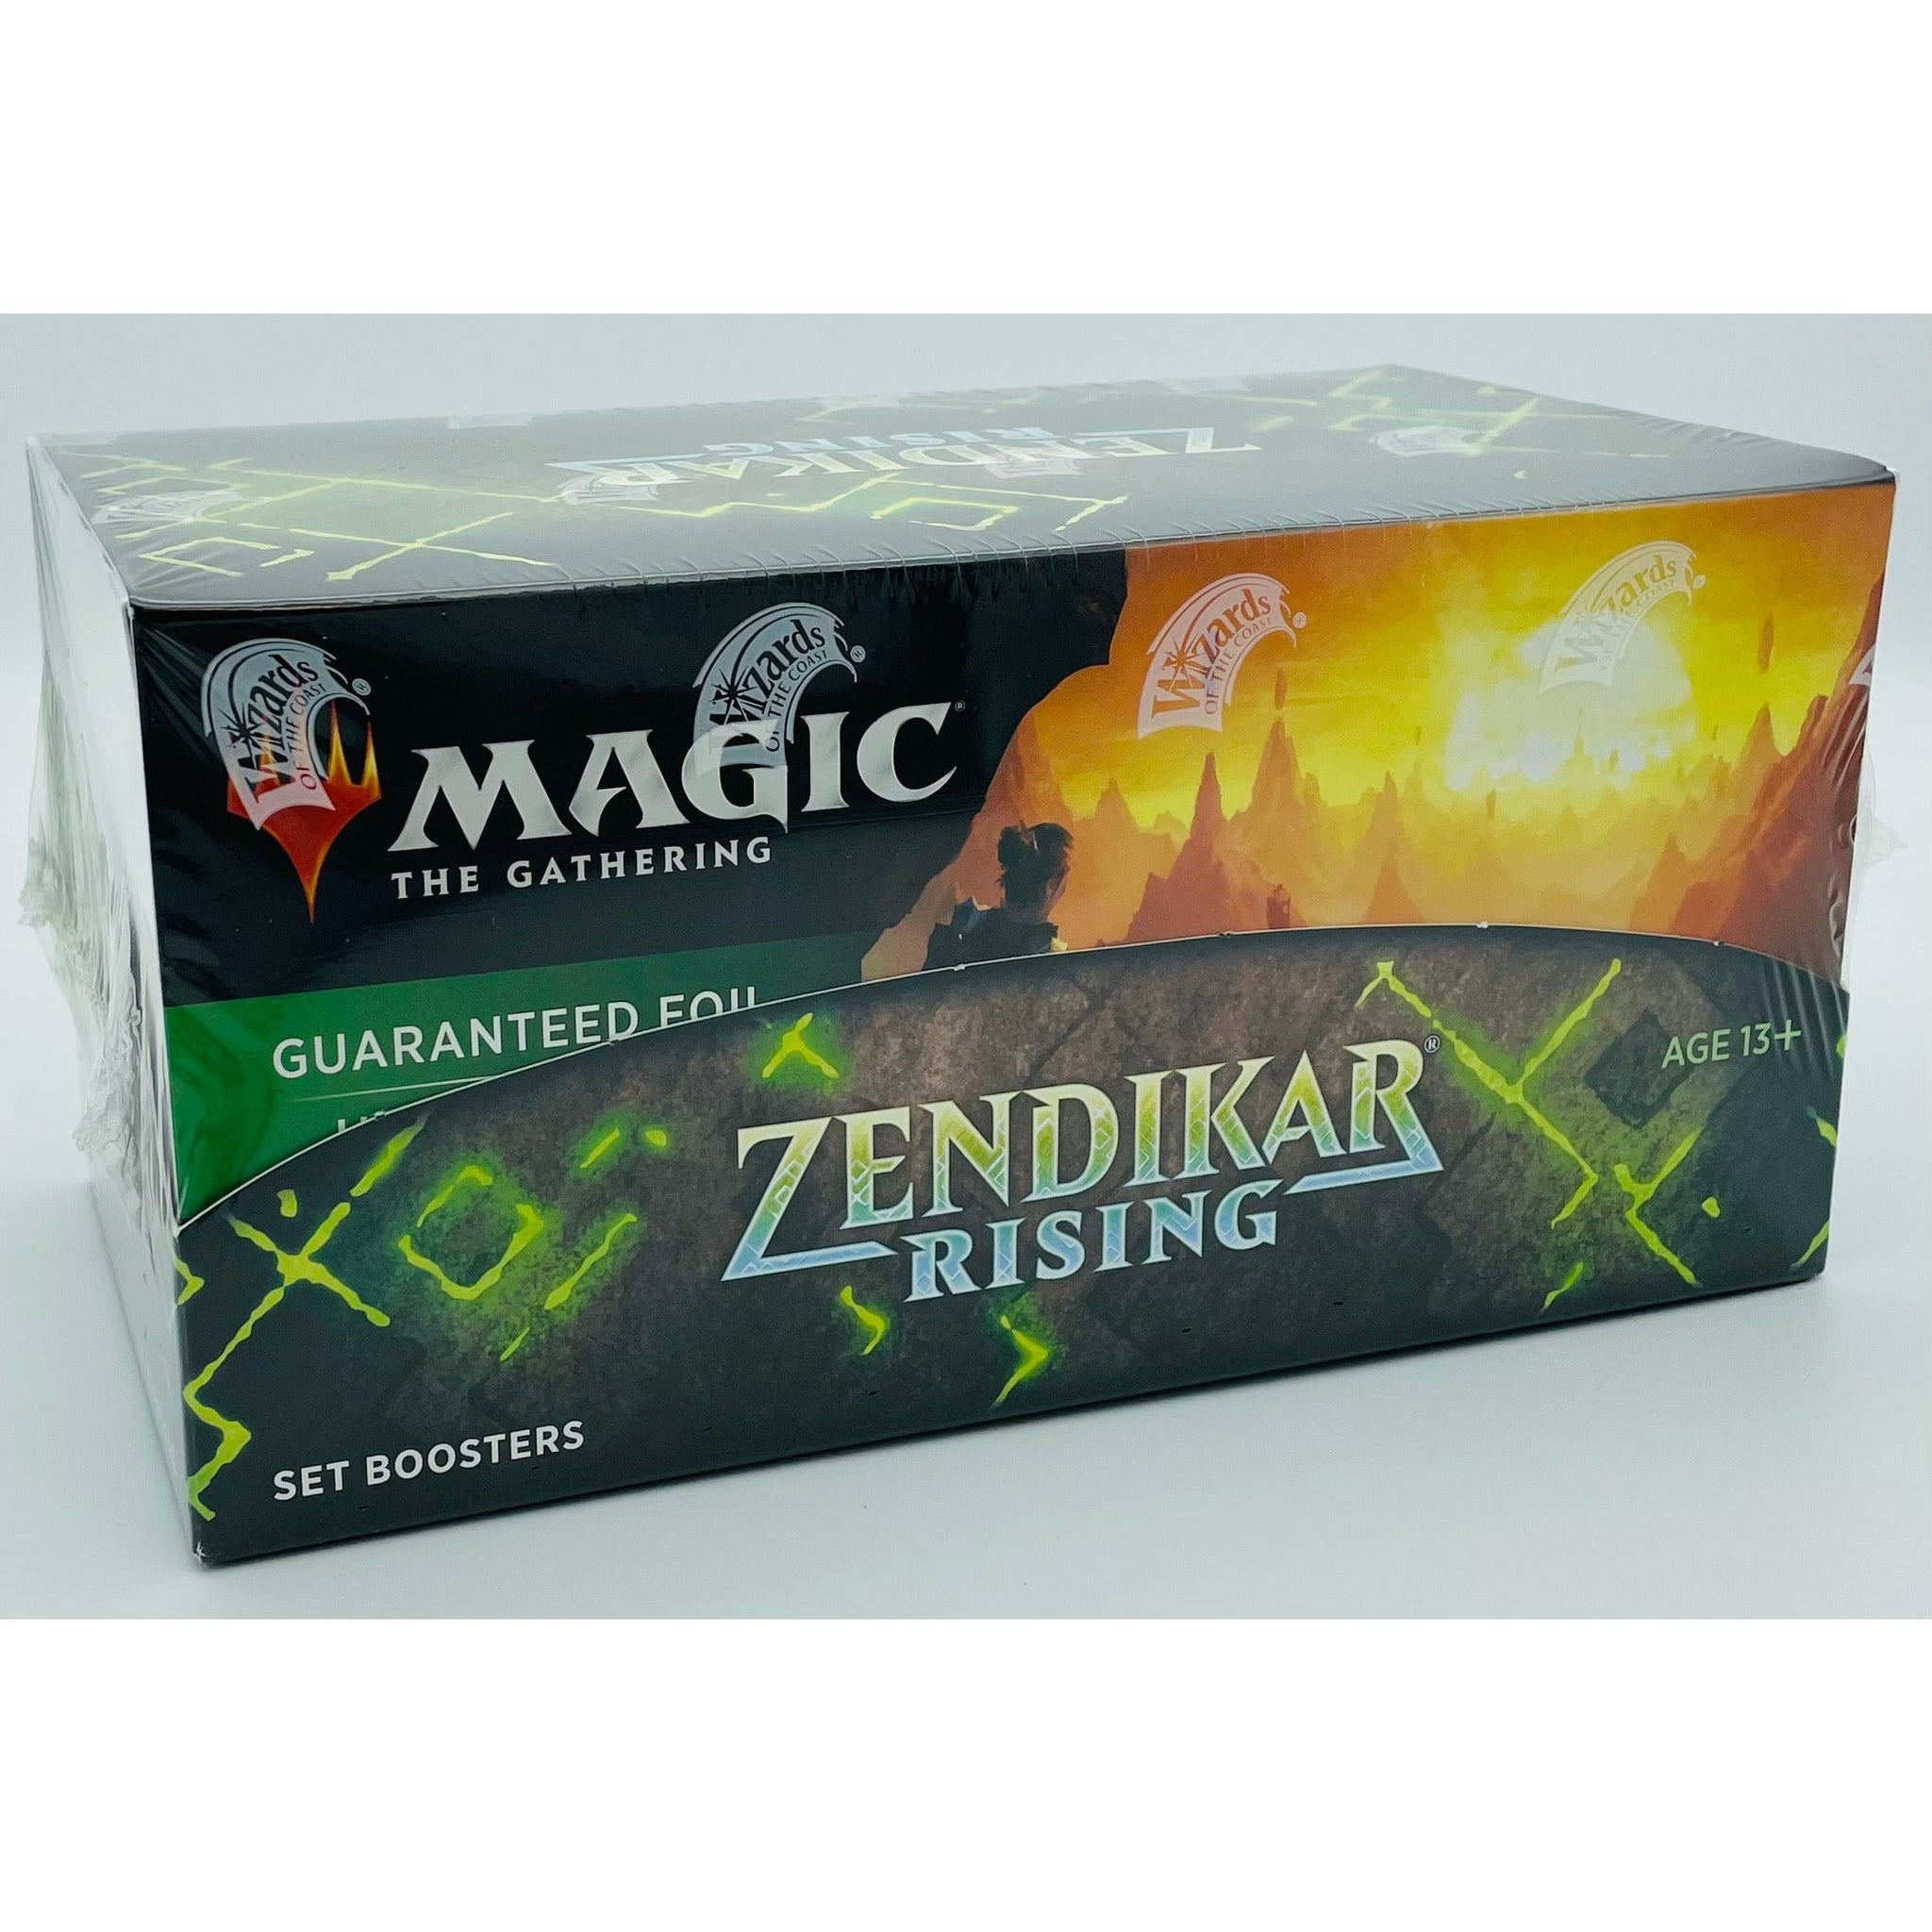 Magic The Gathering - Zendikar Rising Set Booster Box - 30 Packs 360 Cards + 1